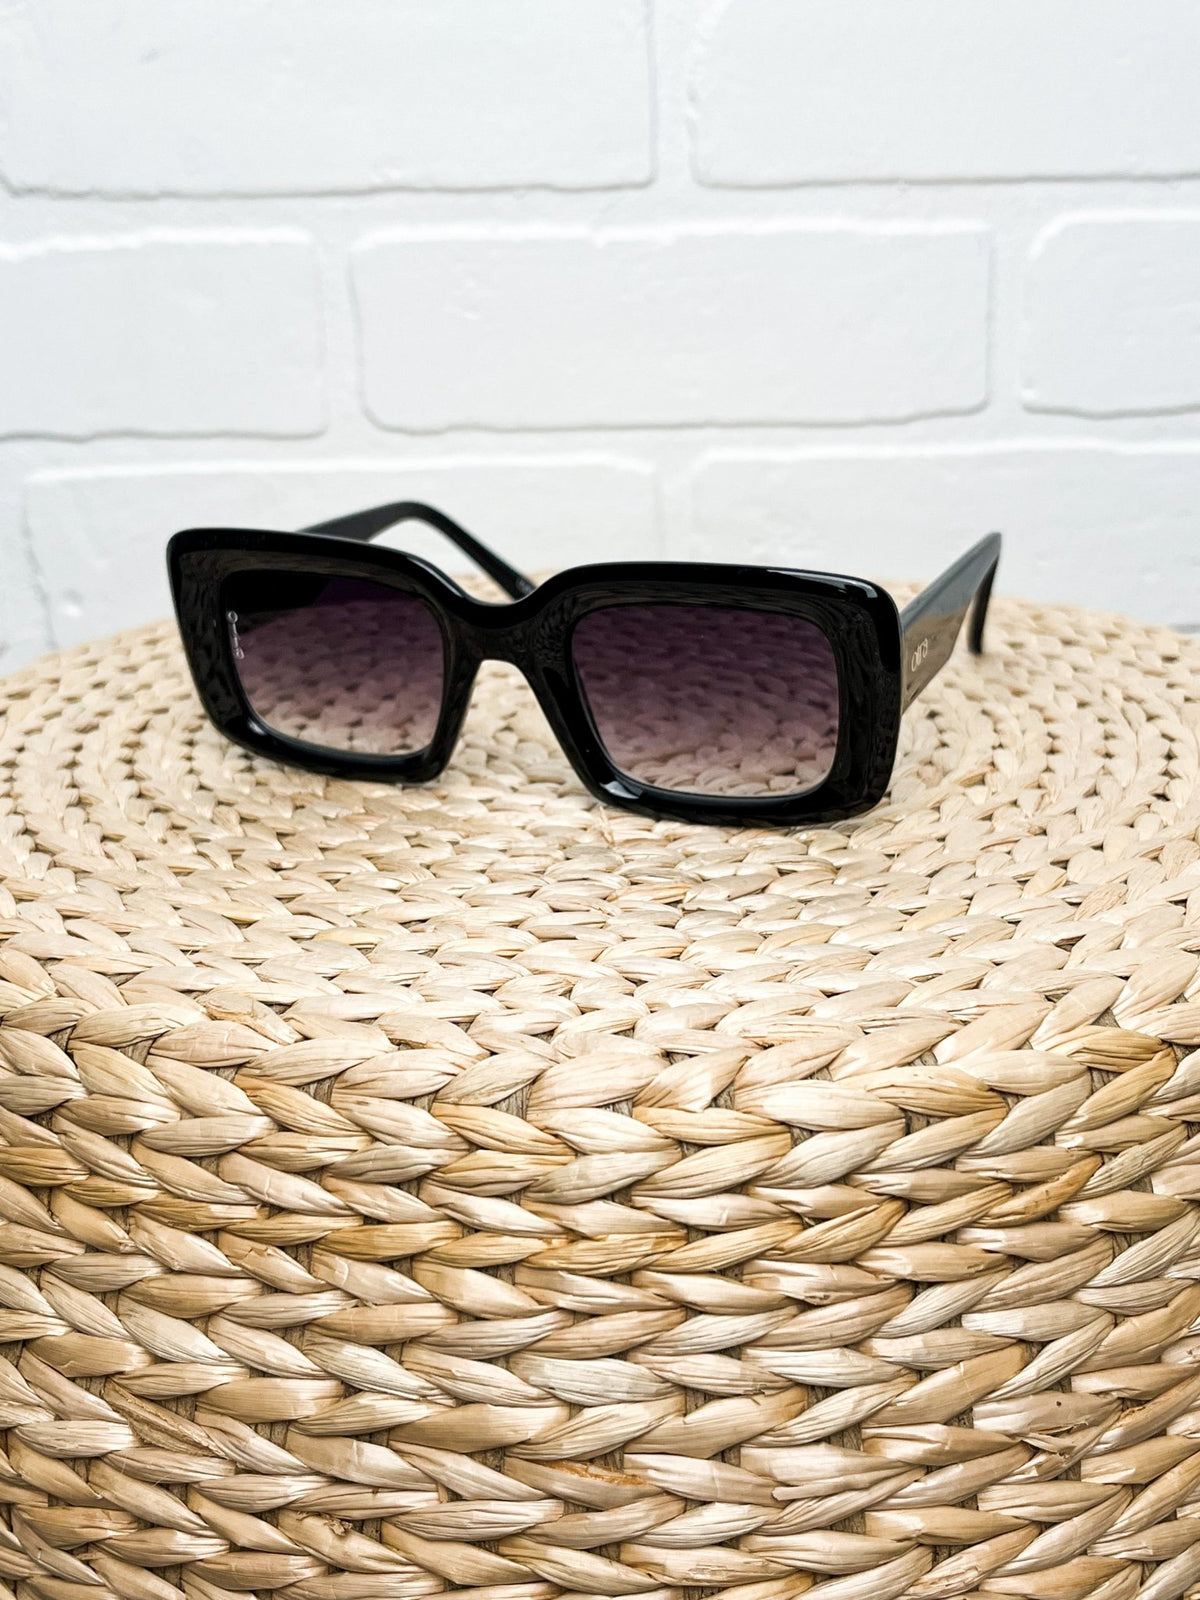 Otra Chelsea sunglasses shiny black - Stylish Sunglasses - Cute Sunglasses at Lush Fashion Lounge Boutique in Oklahoma